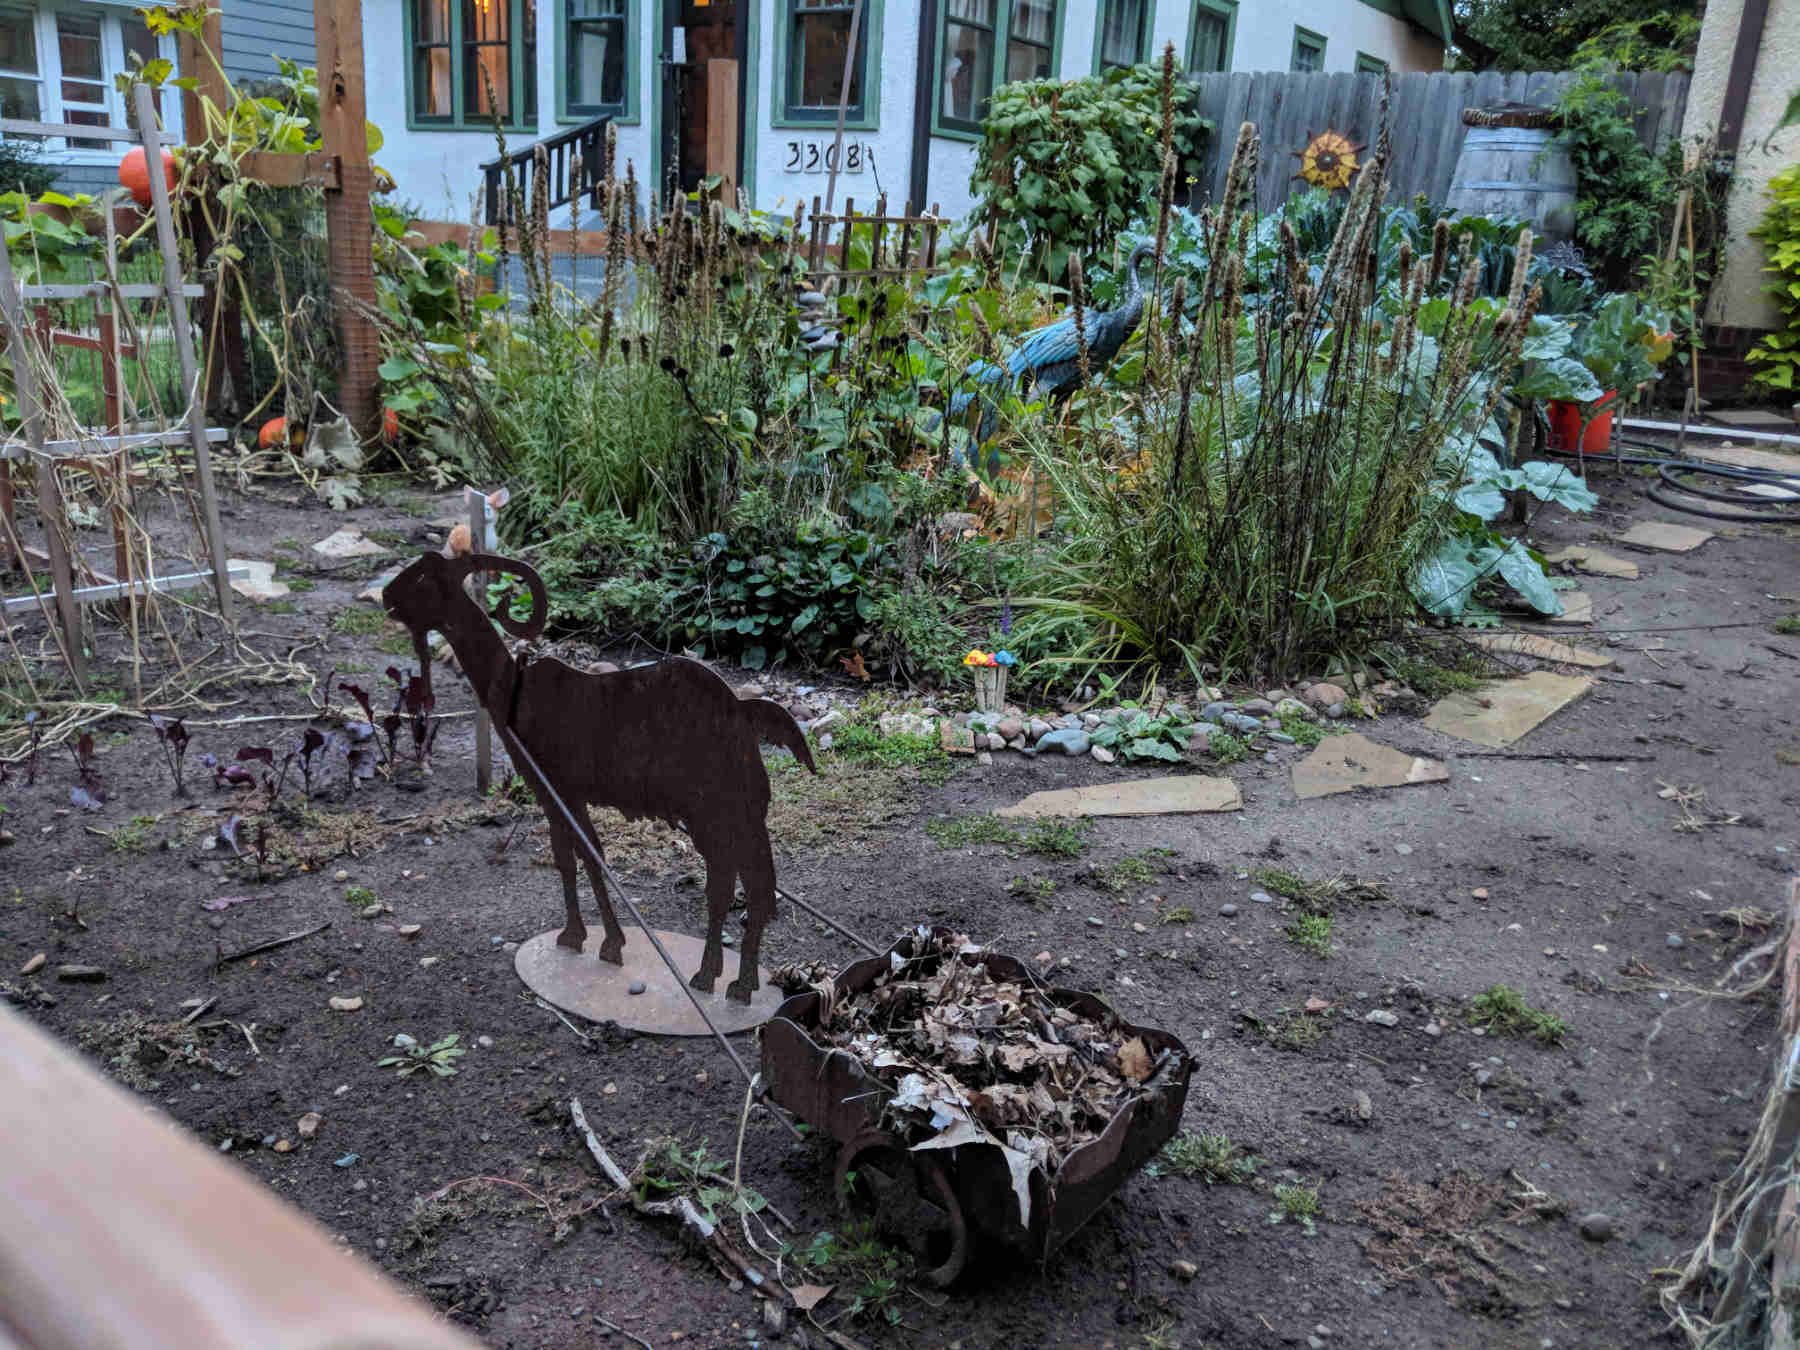 yard art sculpture of goat pulling little wagon